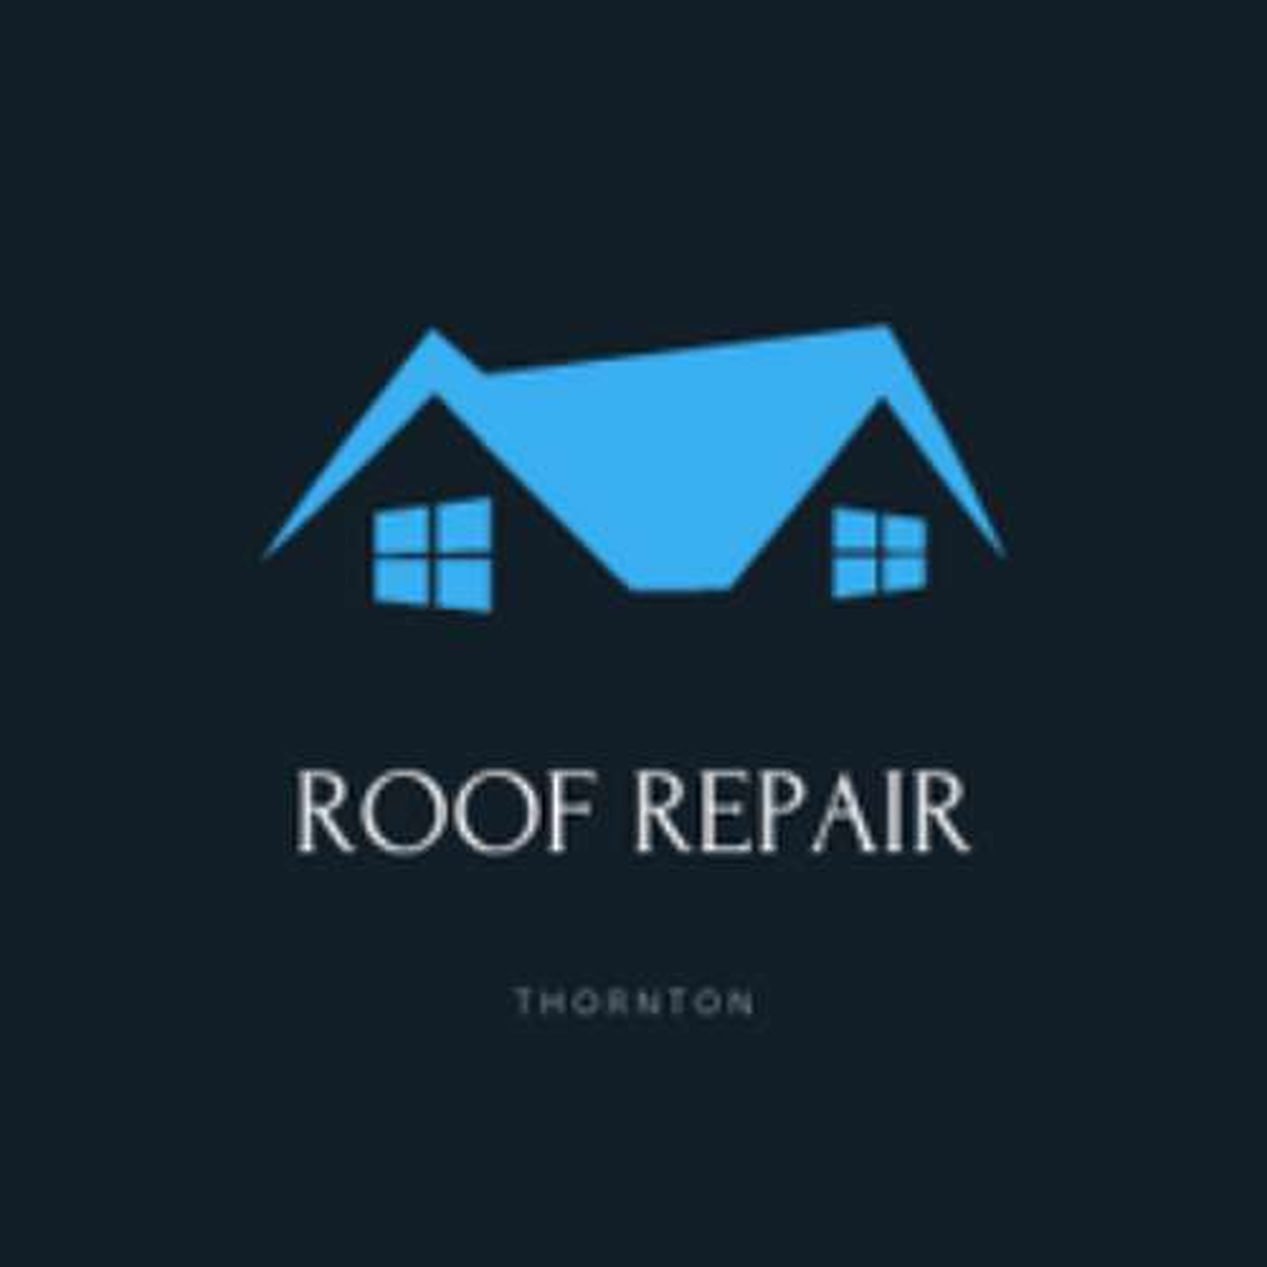 Roof Repair of Thornton